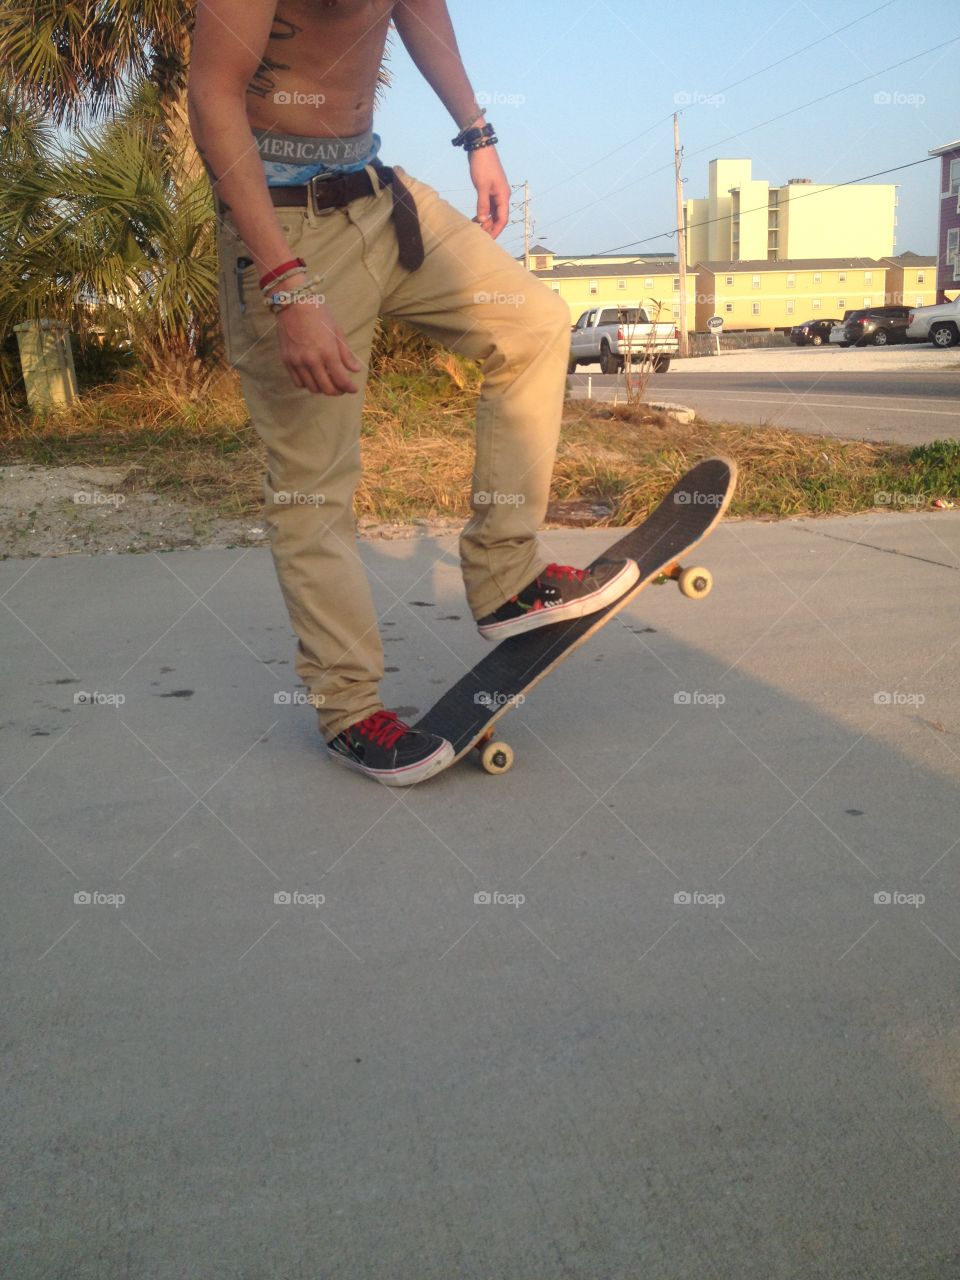 Skateboard pose